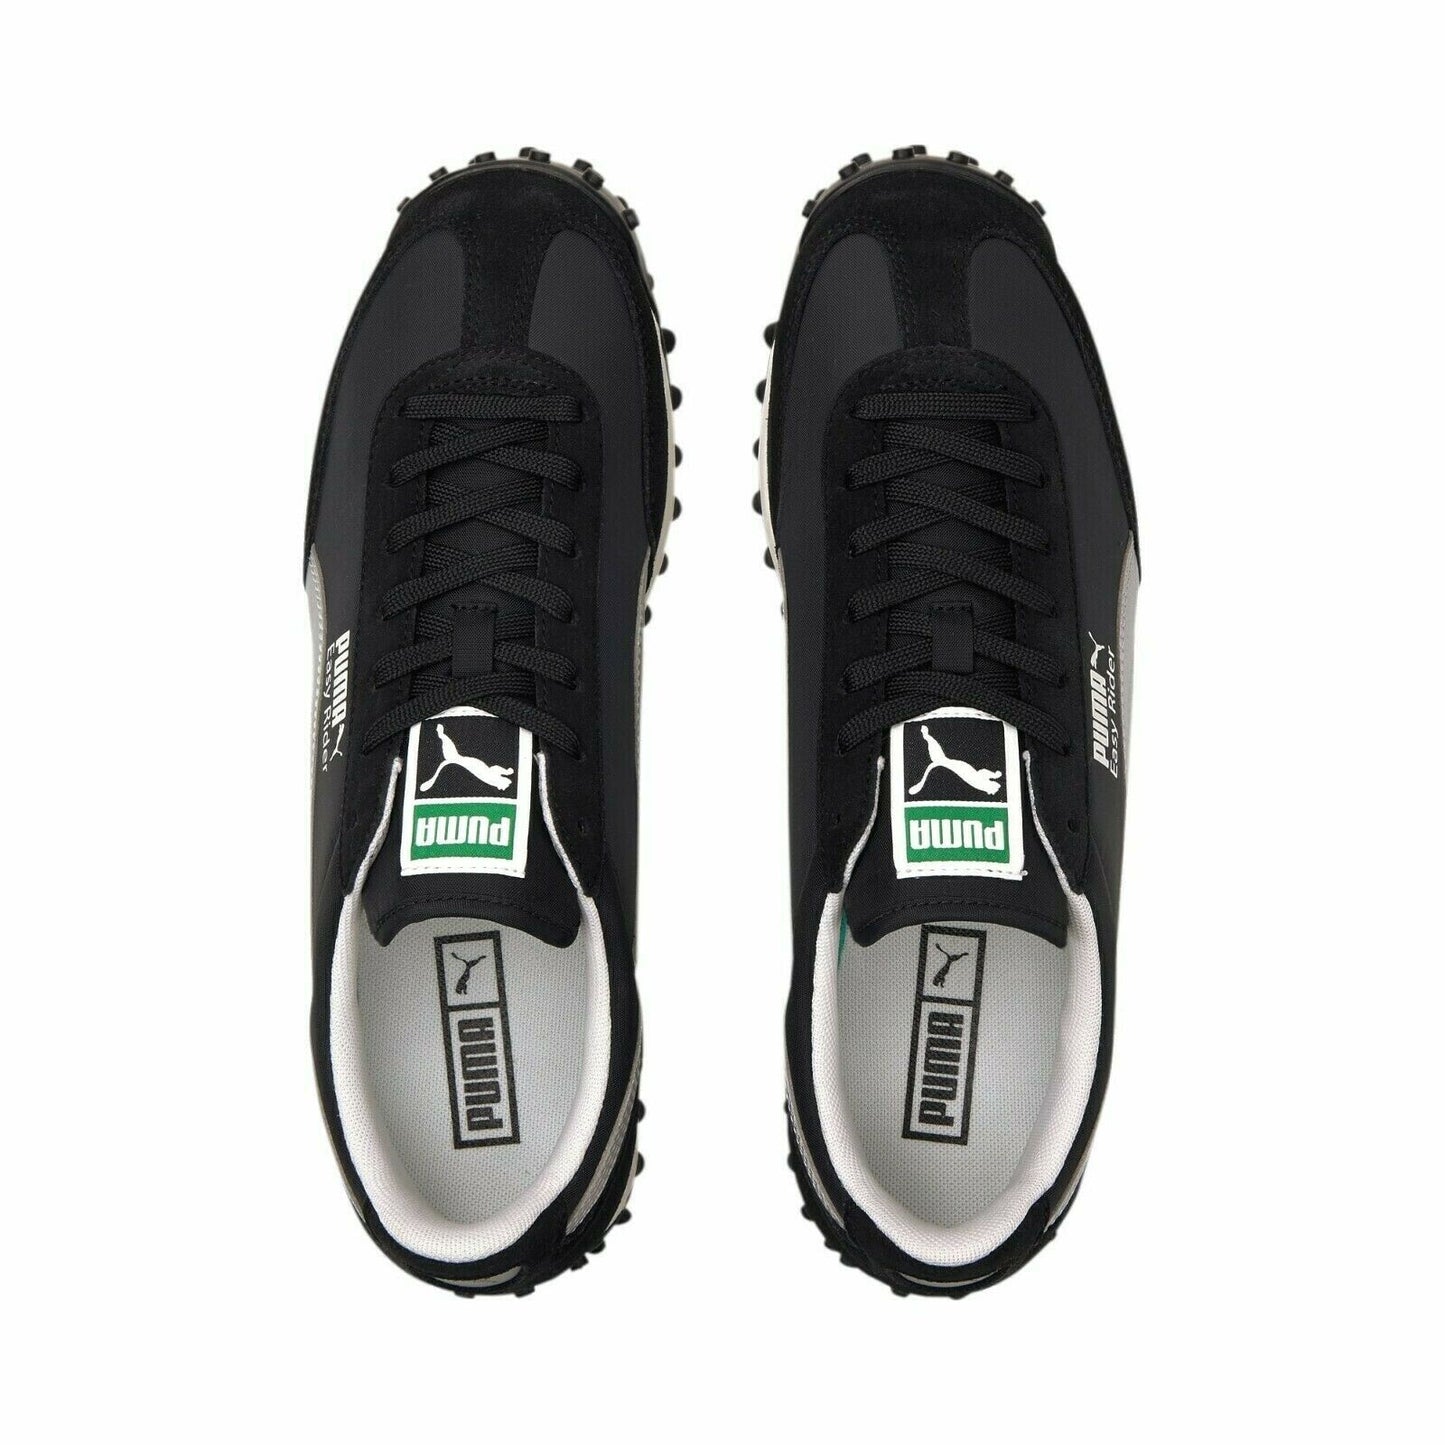 Puma Men's New Easy Rider II Tecno Shoes Sneakers Black Marshmallow 381027-02 Size 11